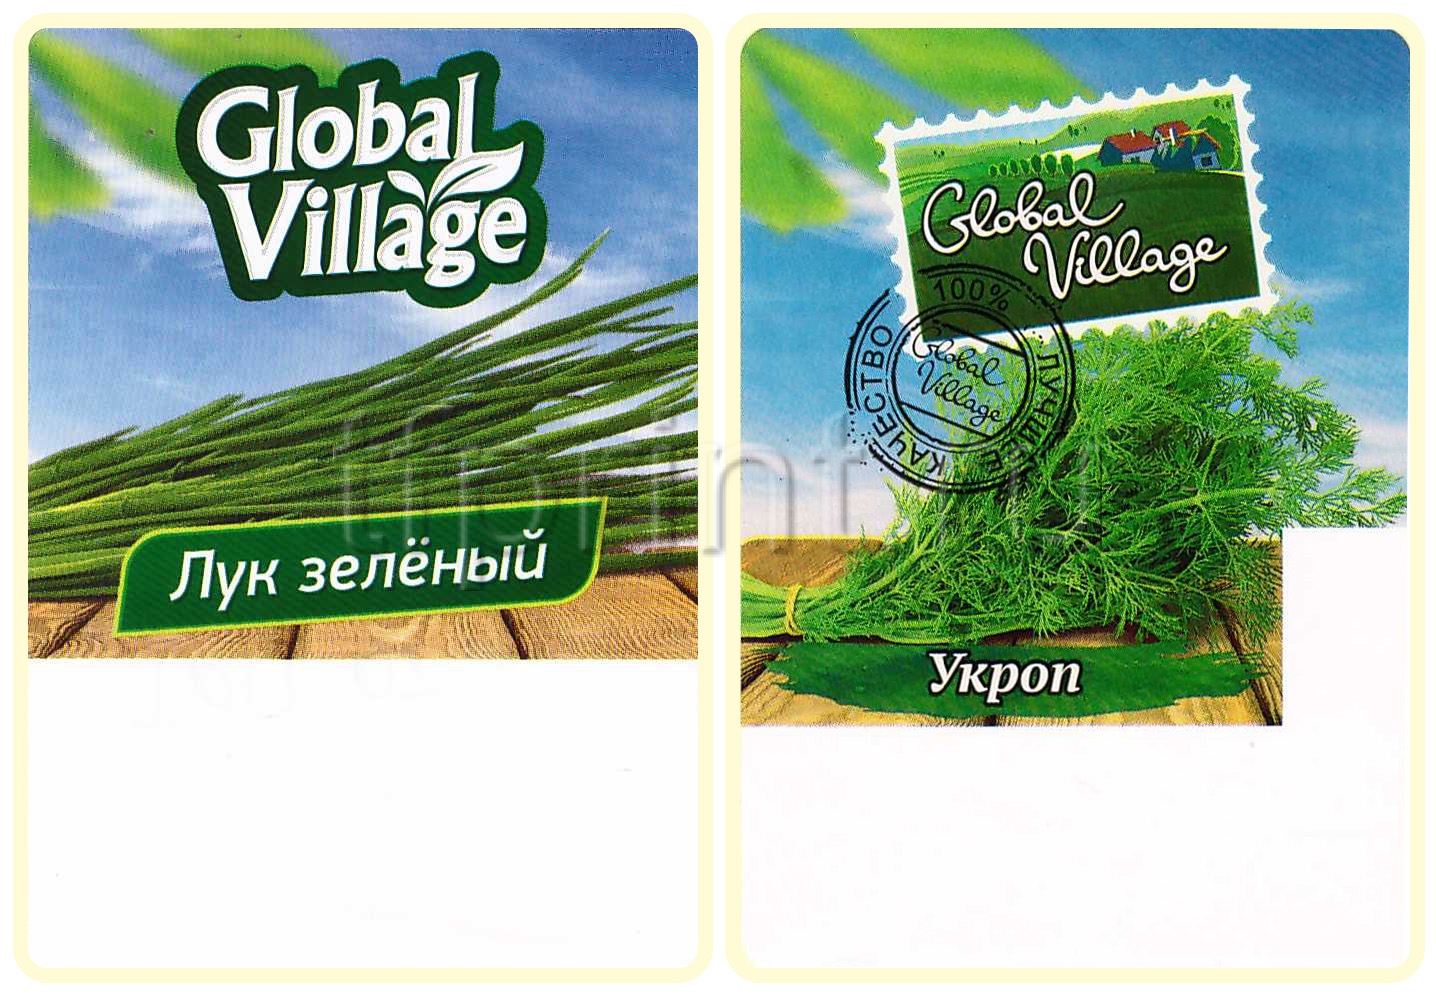 Global village чья. Глобал Виладж зелень. Глобал Вилладж этикетка. Этикетка зелень. Глобал Вилладж продукты.